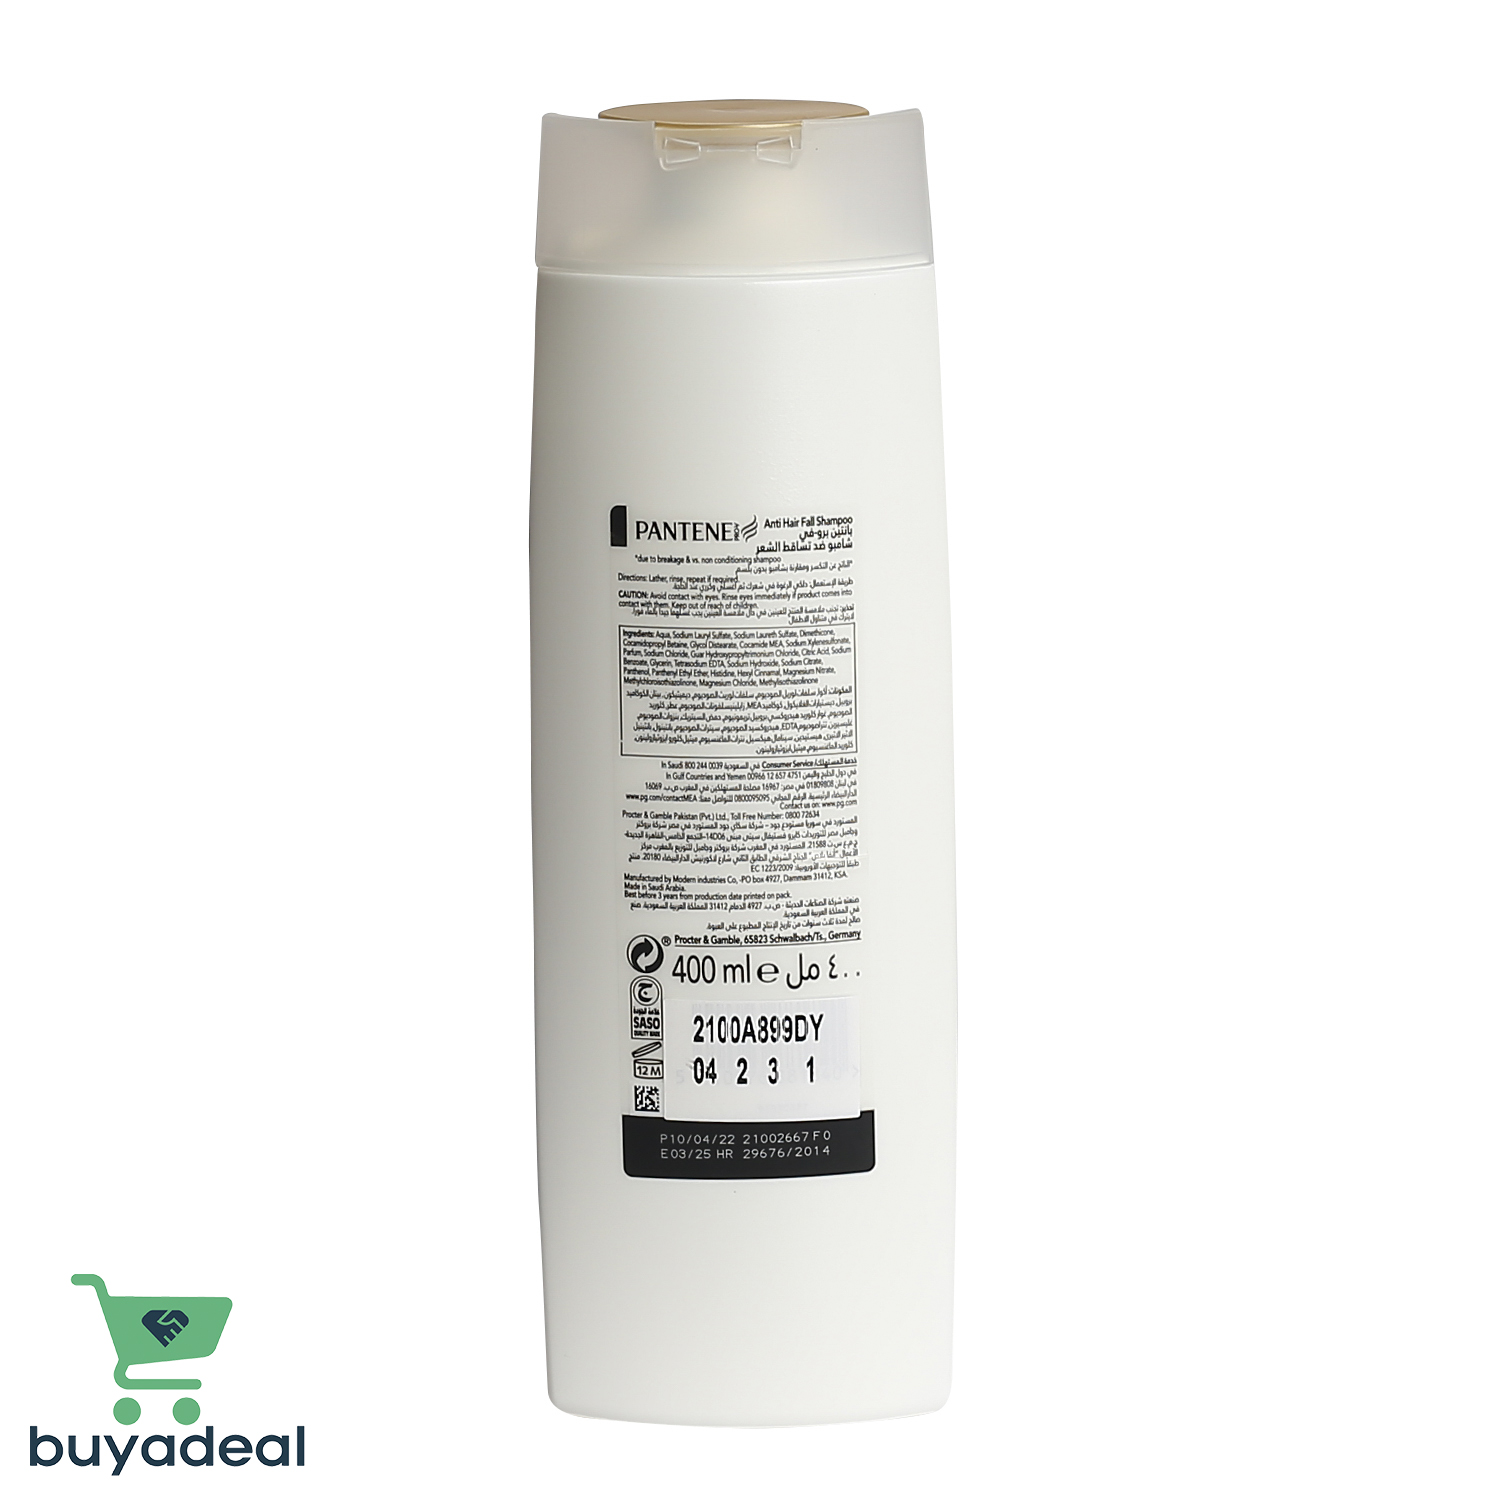 Buyadeal Product Pantene Pro-V Smooth & Silky Shampoo - 400ml